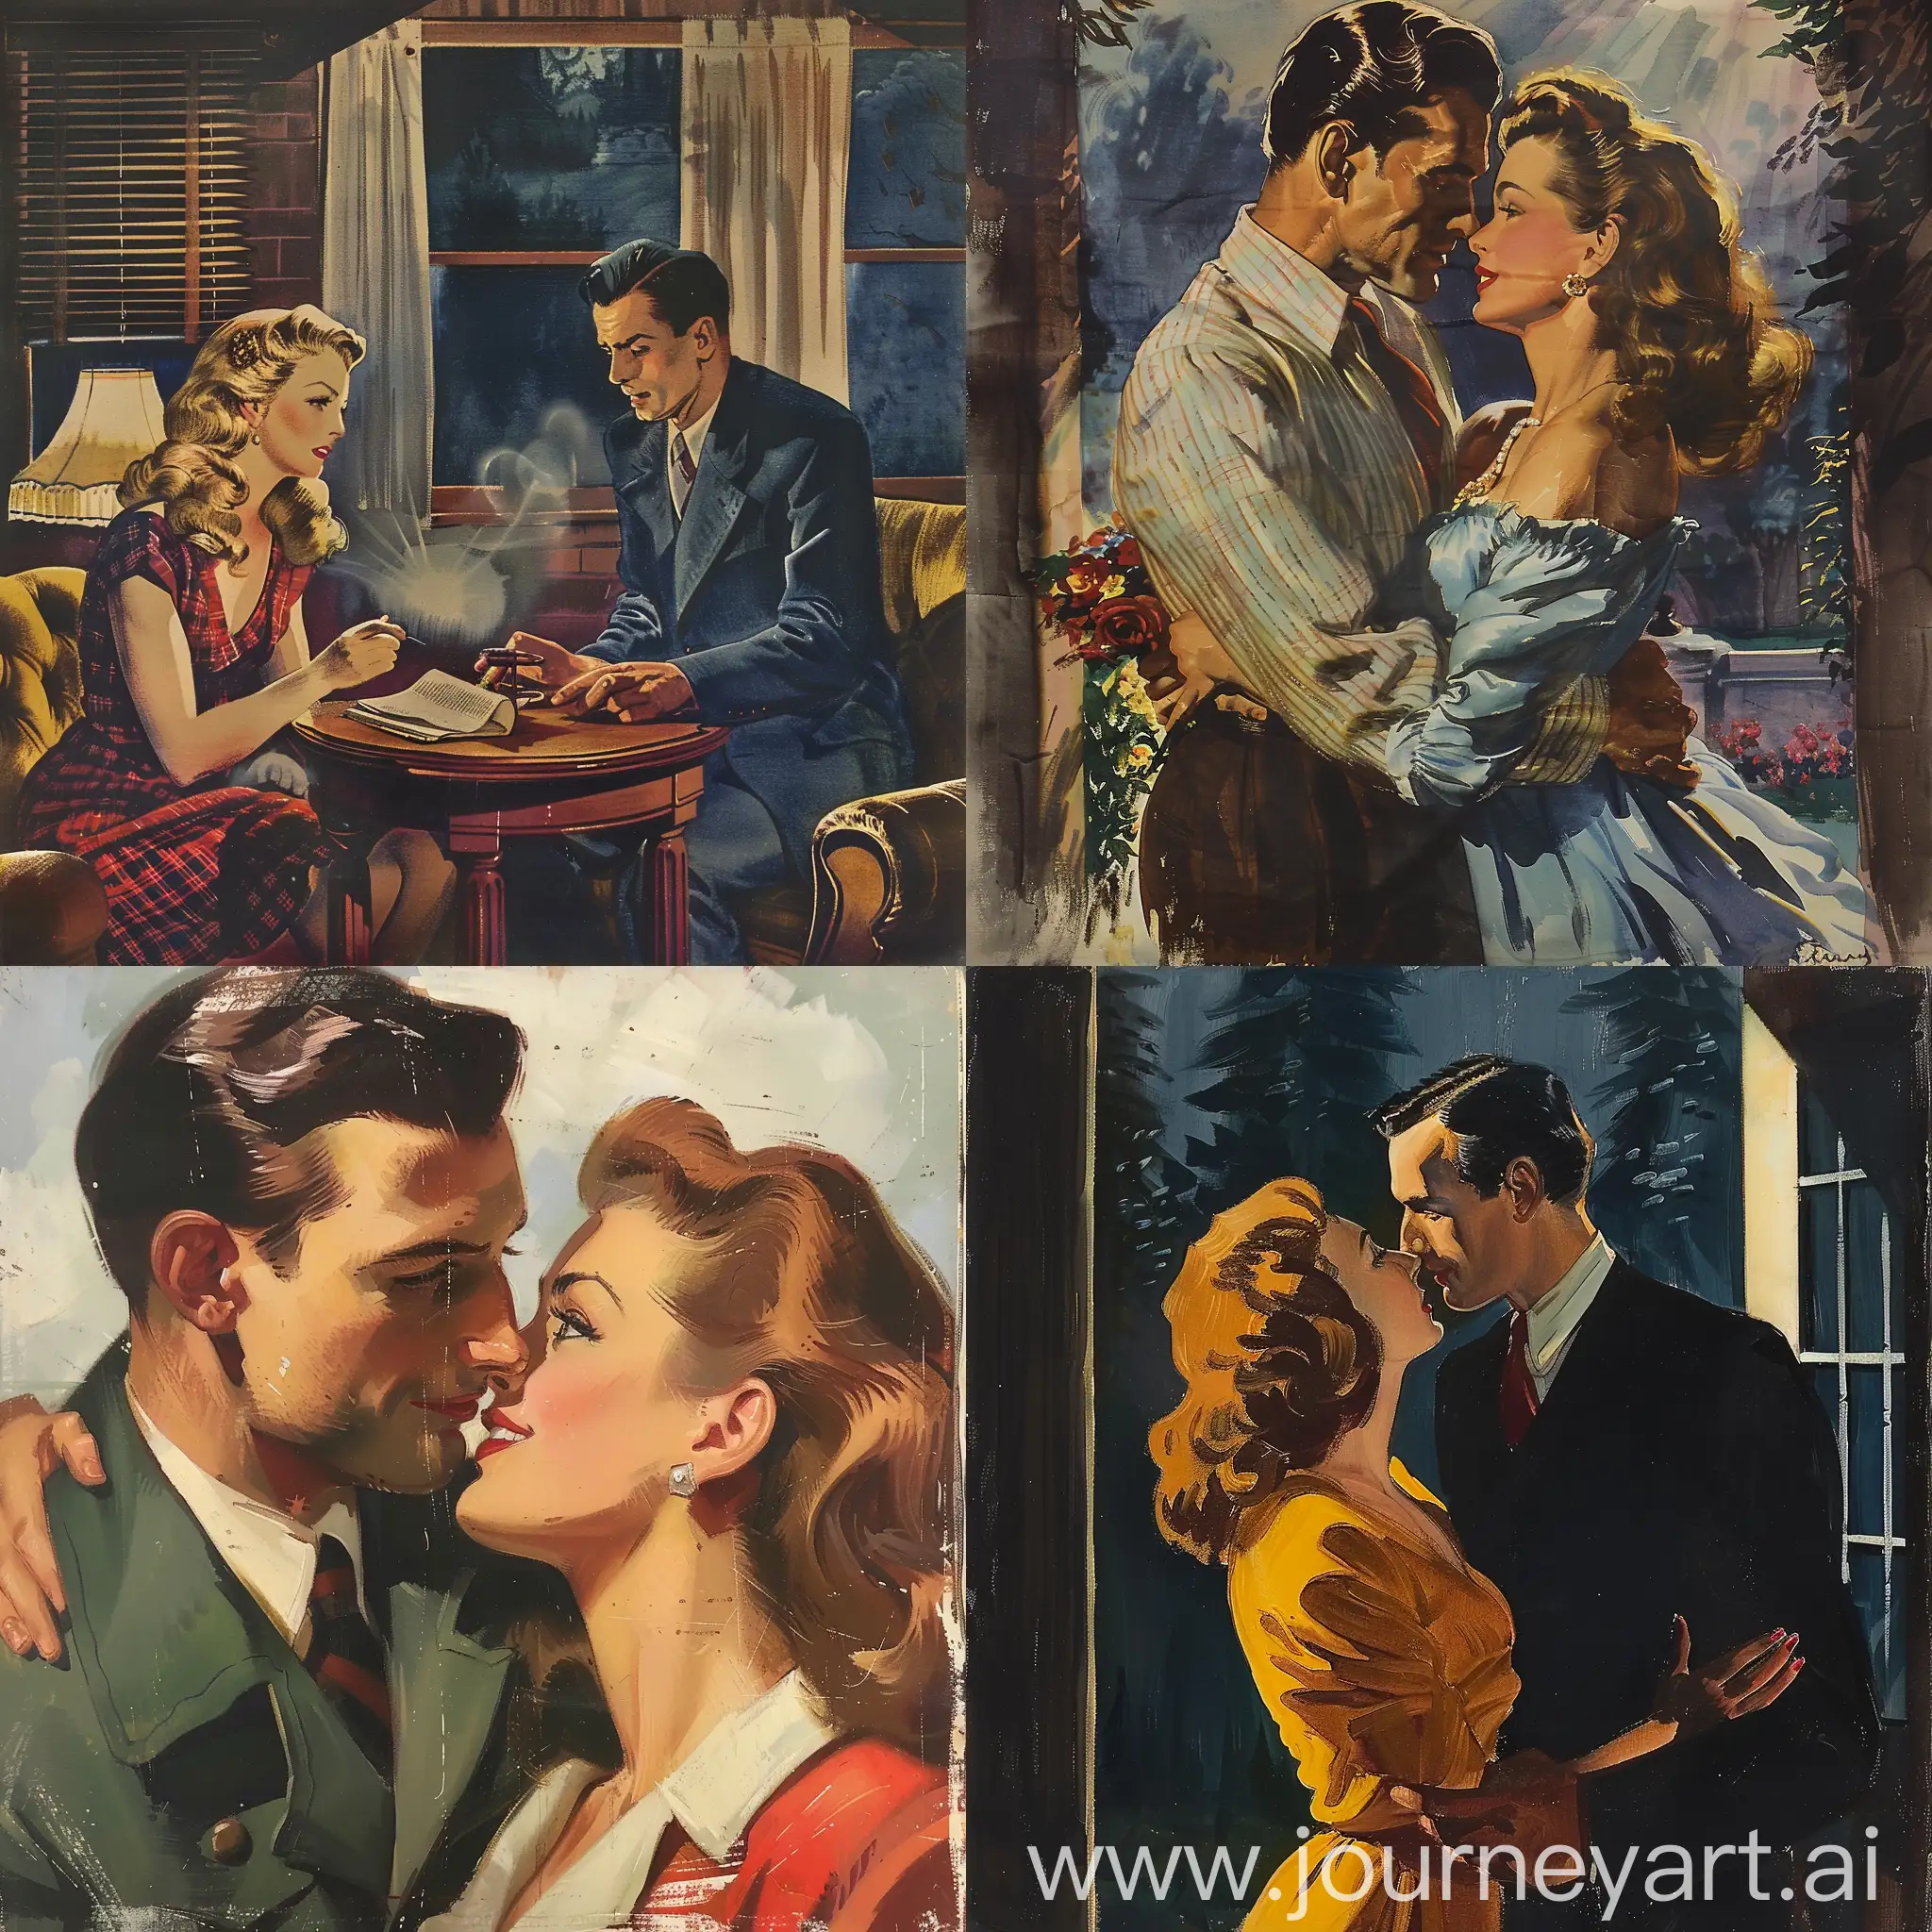 1940s romance, pulp art